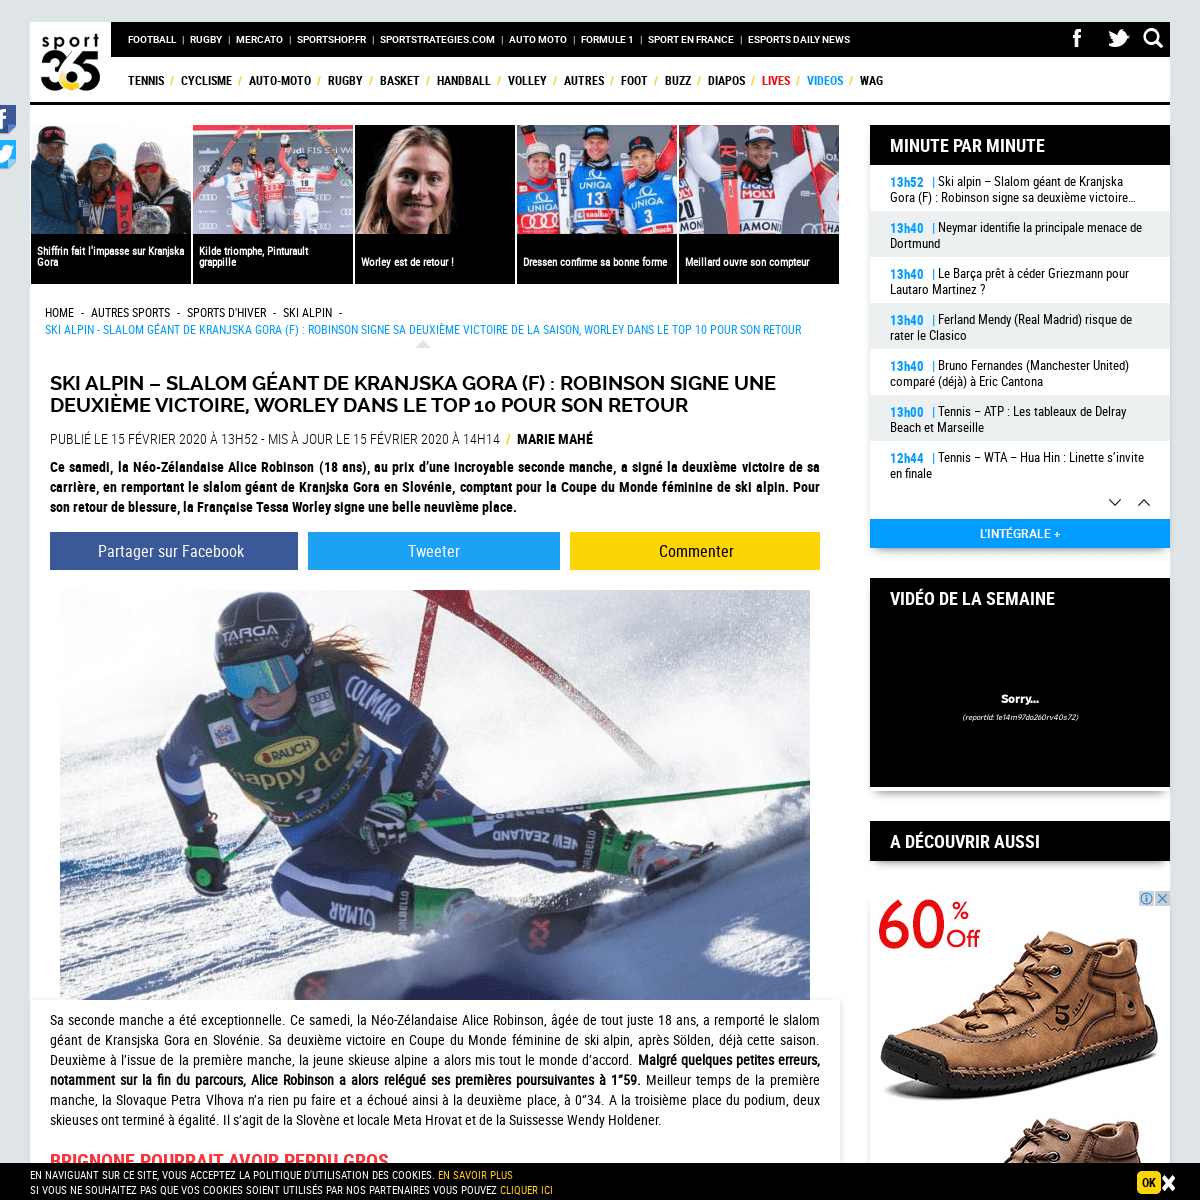 A complete backup of www.sport365.fr/ski-alpin-slalom-geant-de-kranjska-gora-f-vlhova-sadjuge-premiere-manche-worley-placee-reto